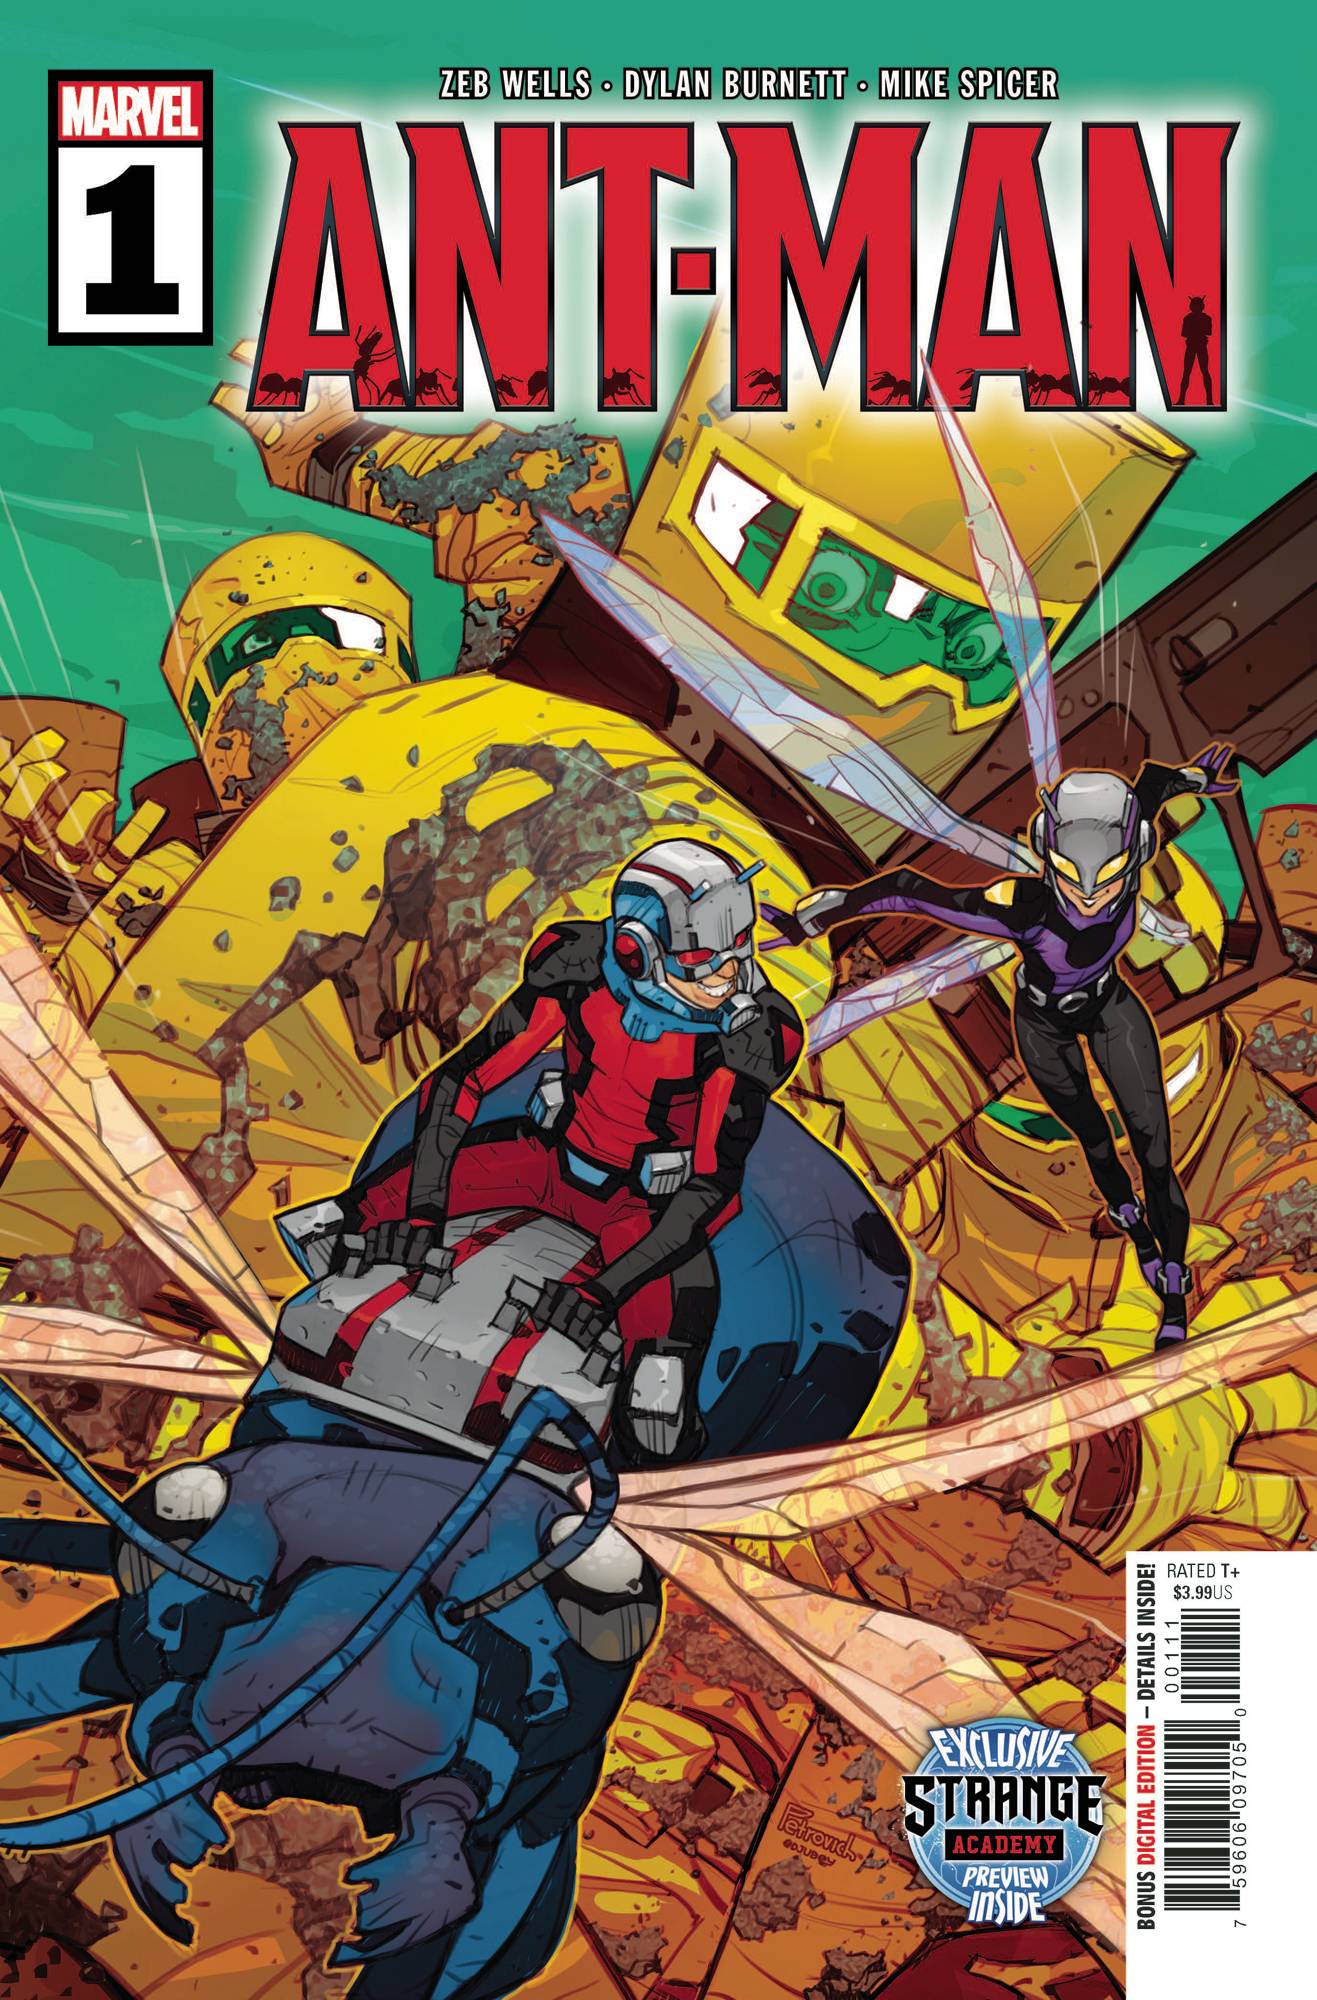 ANT-MAN #1 (OF 5)